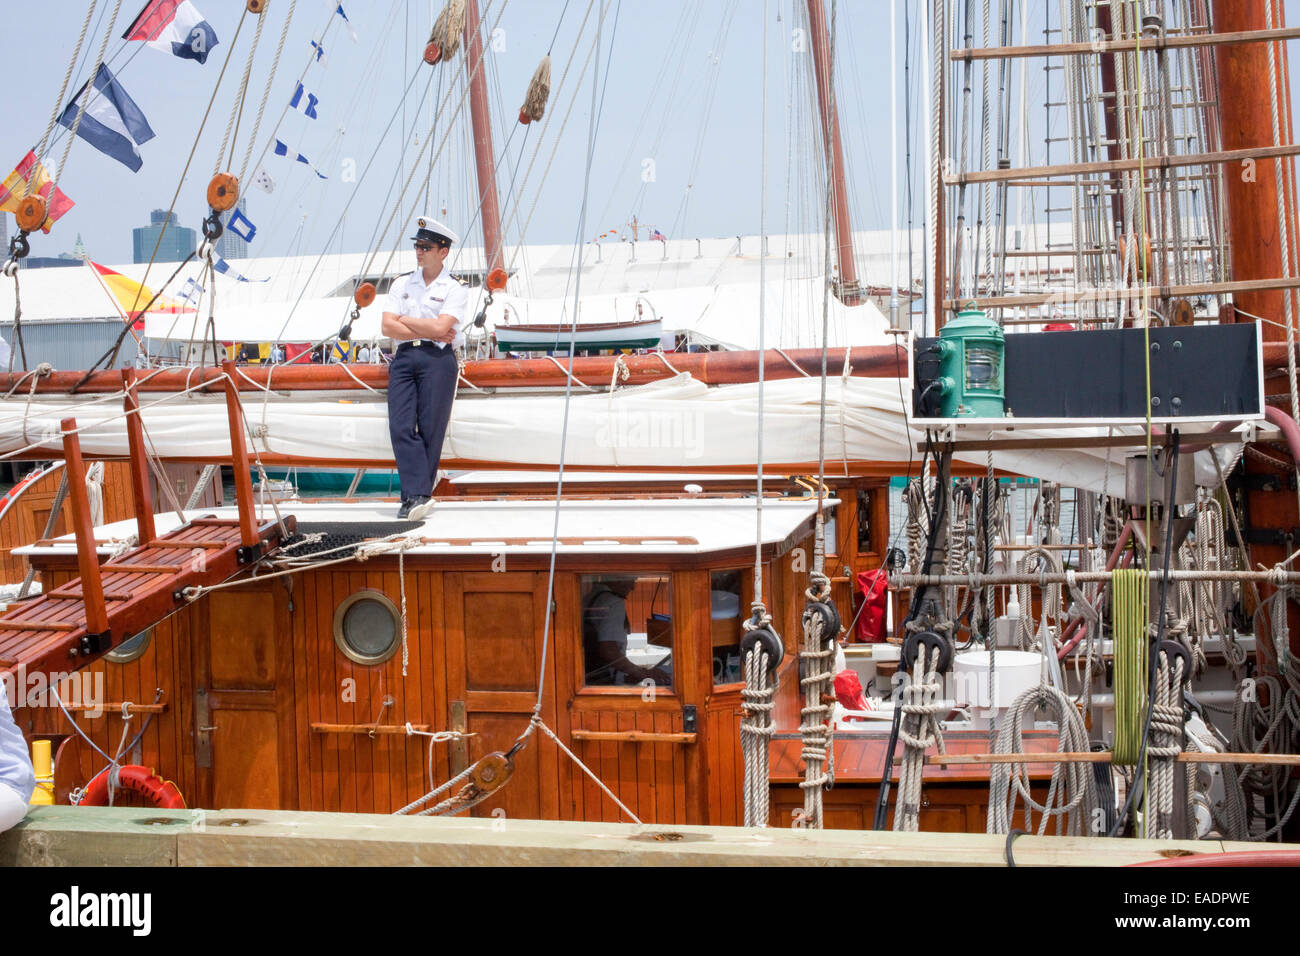 Sailor on wooden sailboat Stock Photo